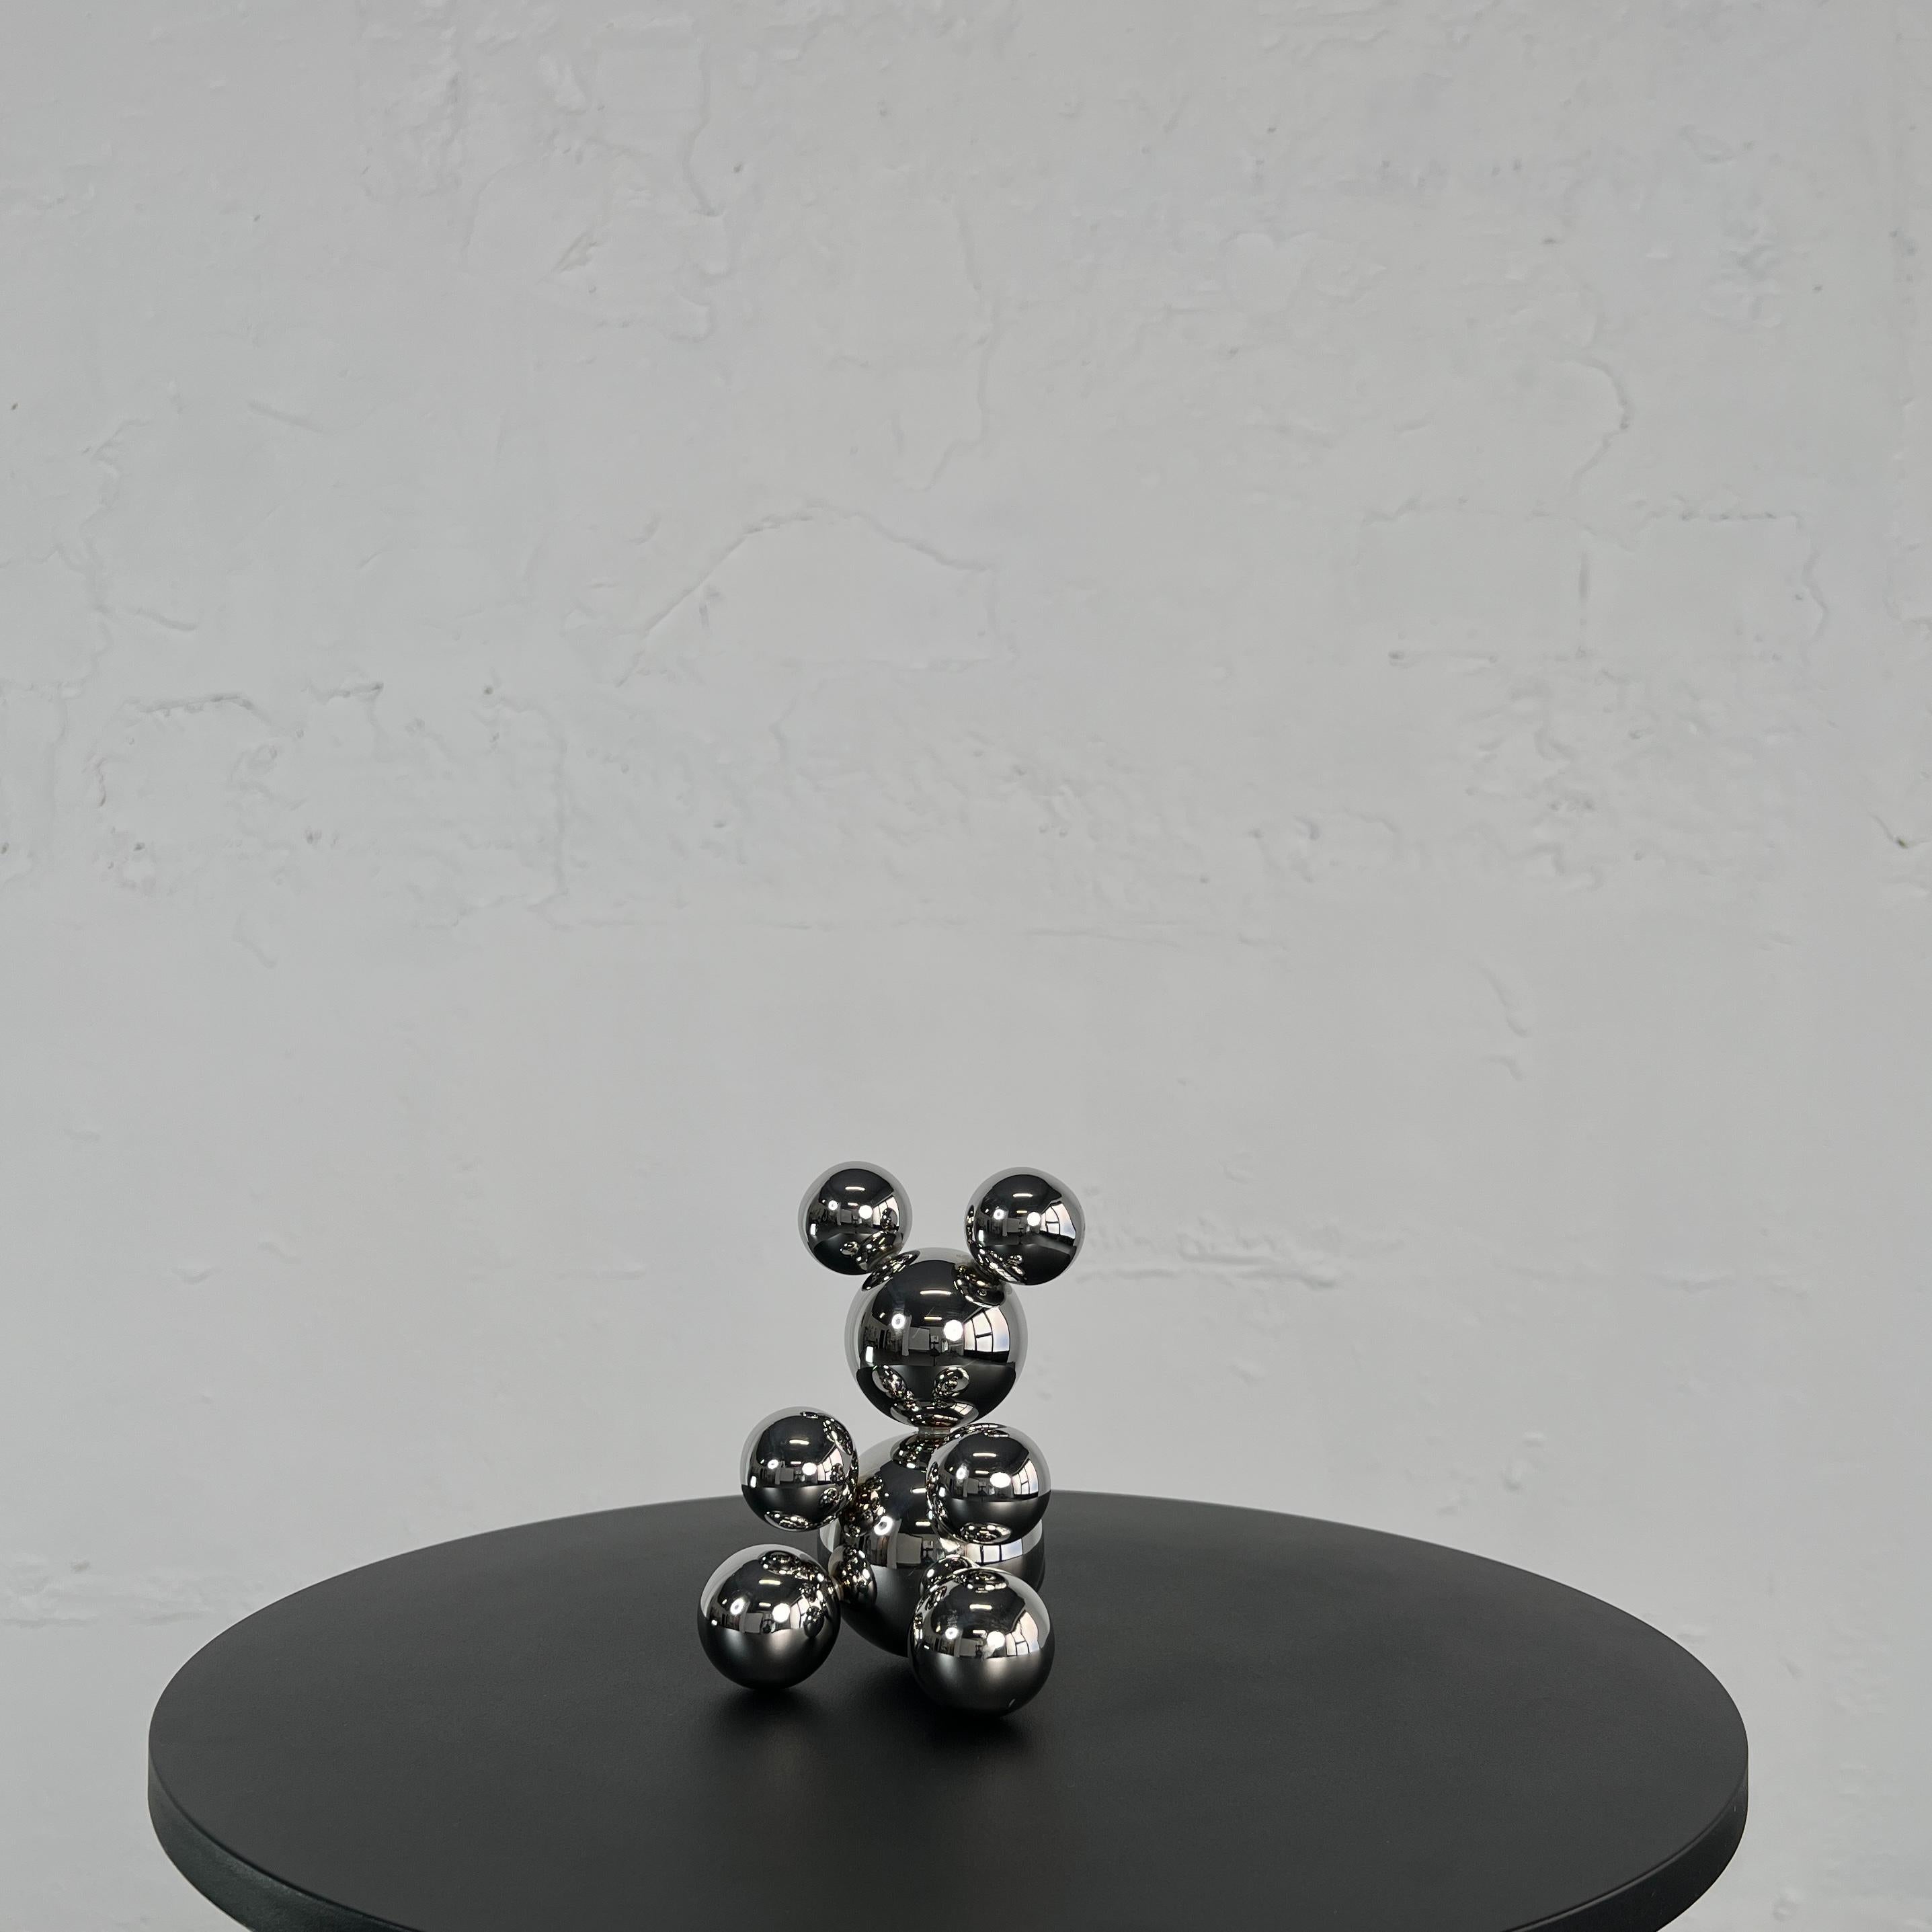 Tiny Stainless Steel Bear 'Ricky' Sculpture Minimalistic Animal